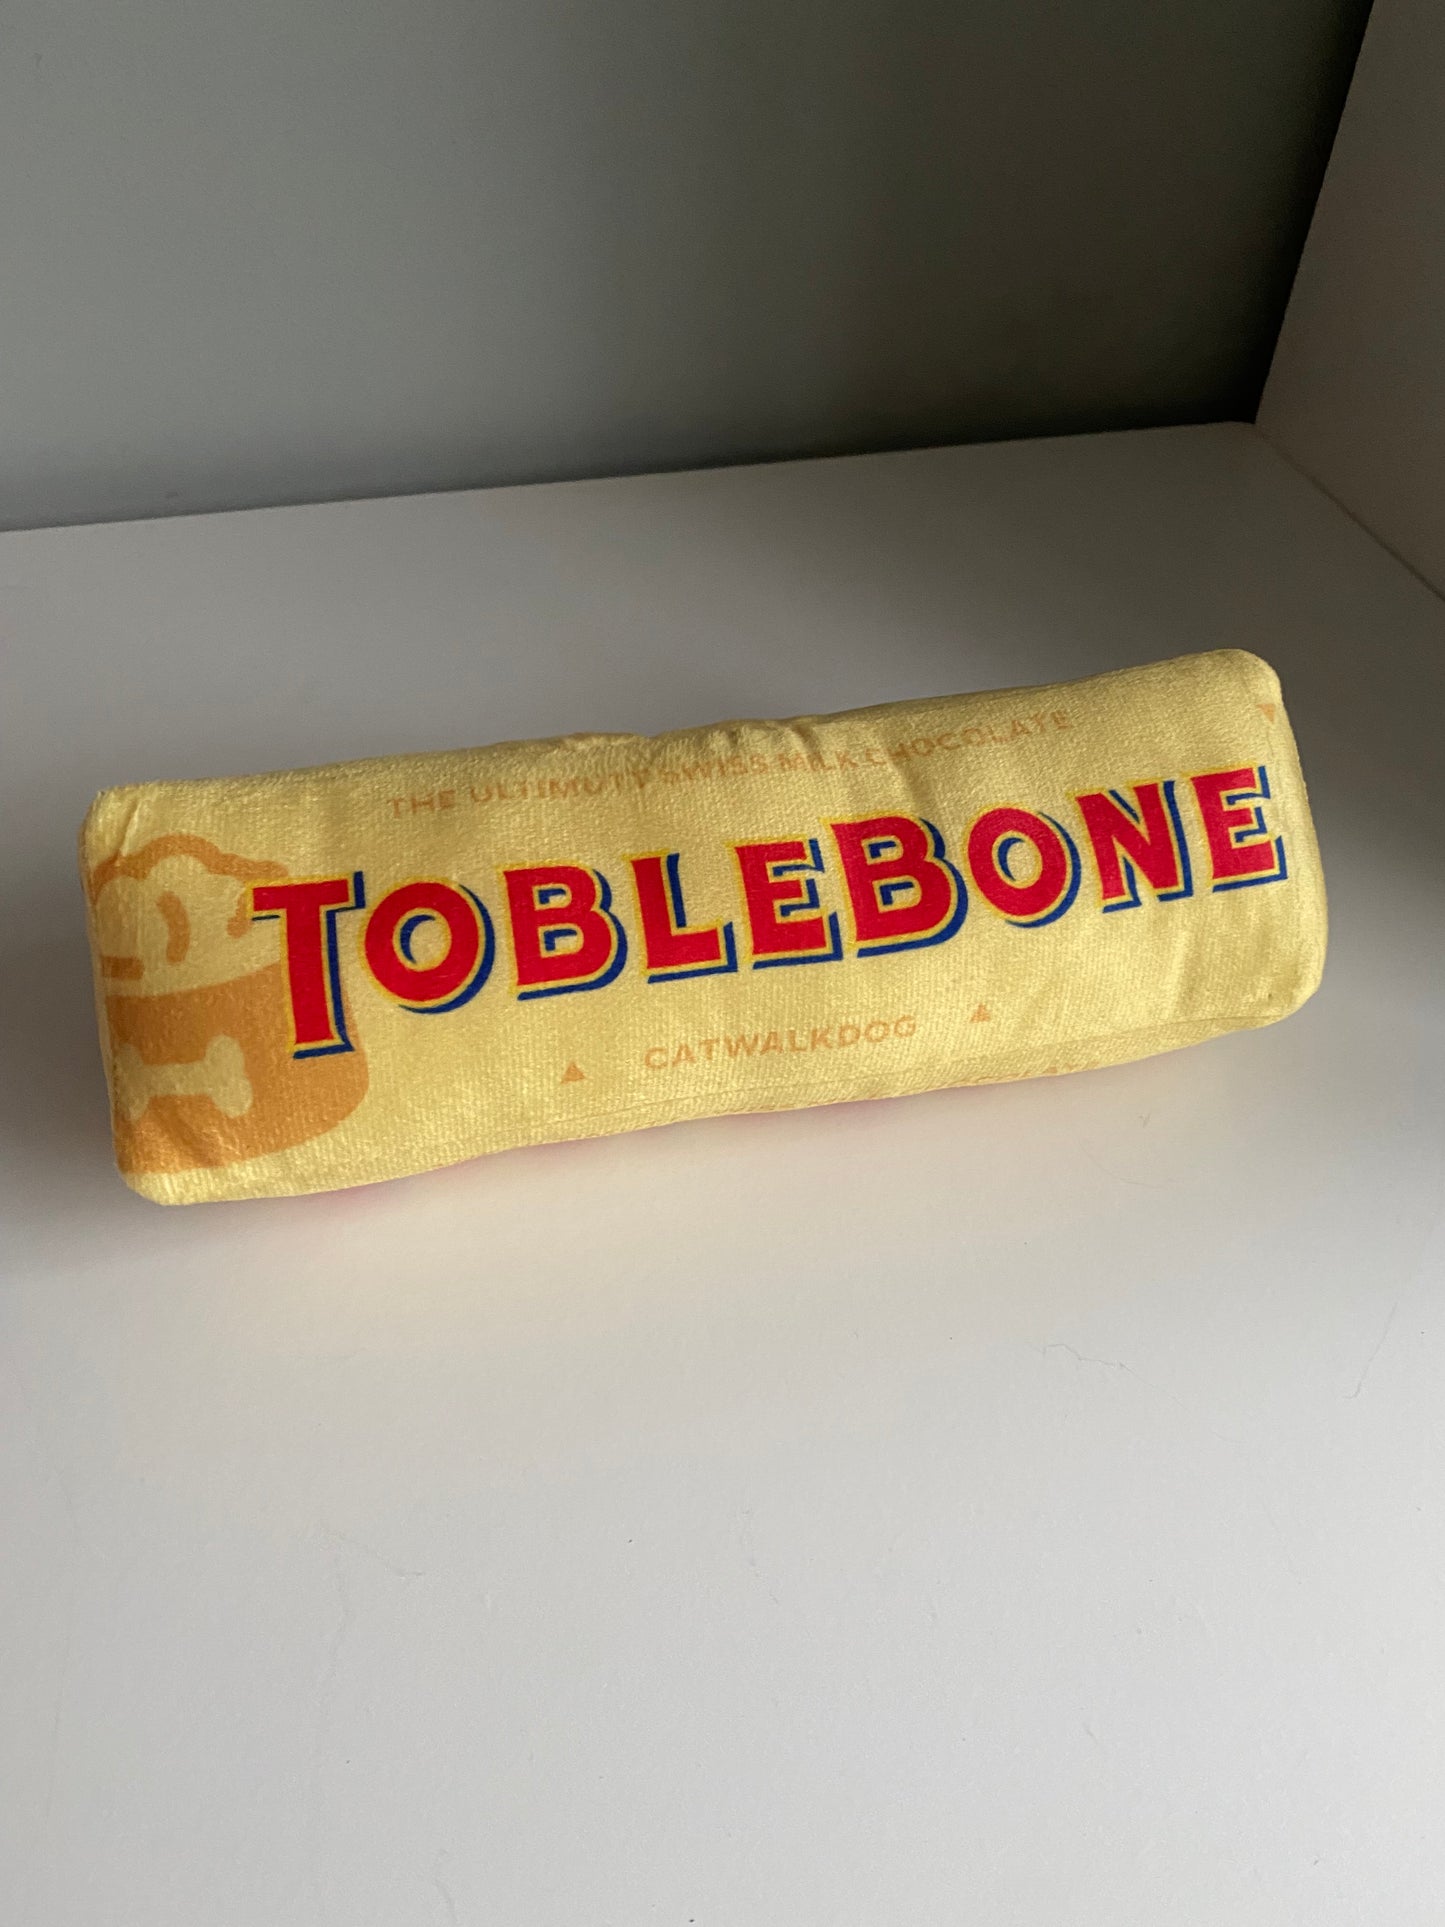 Toblebone